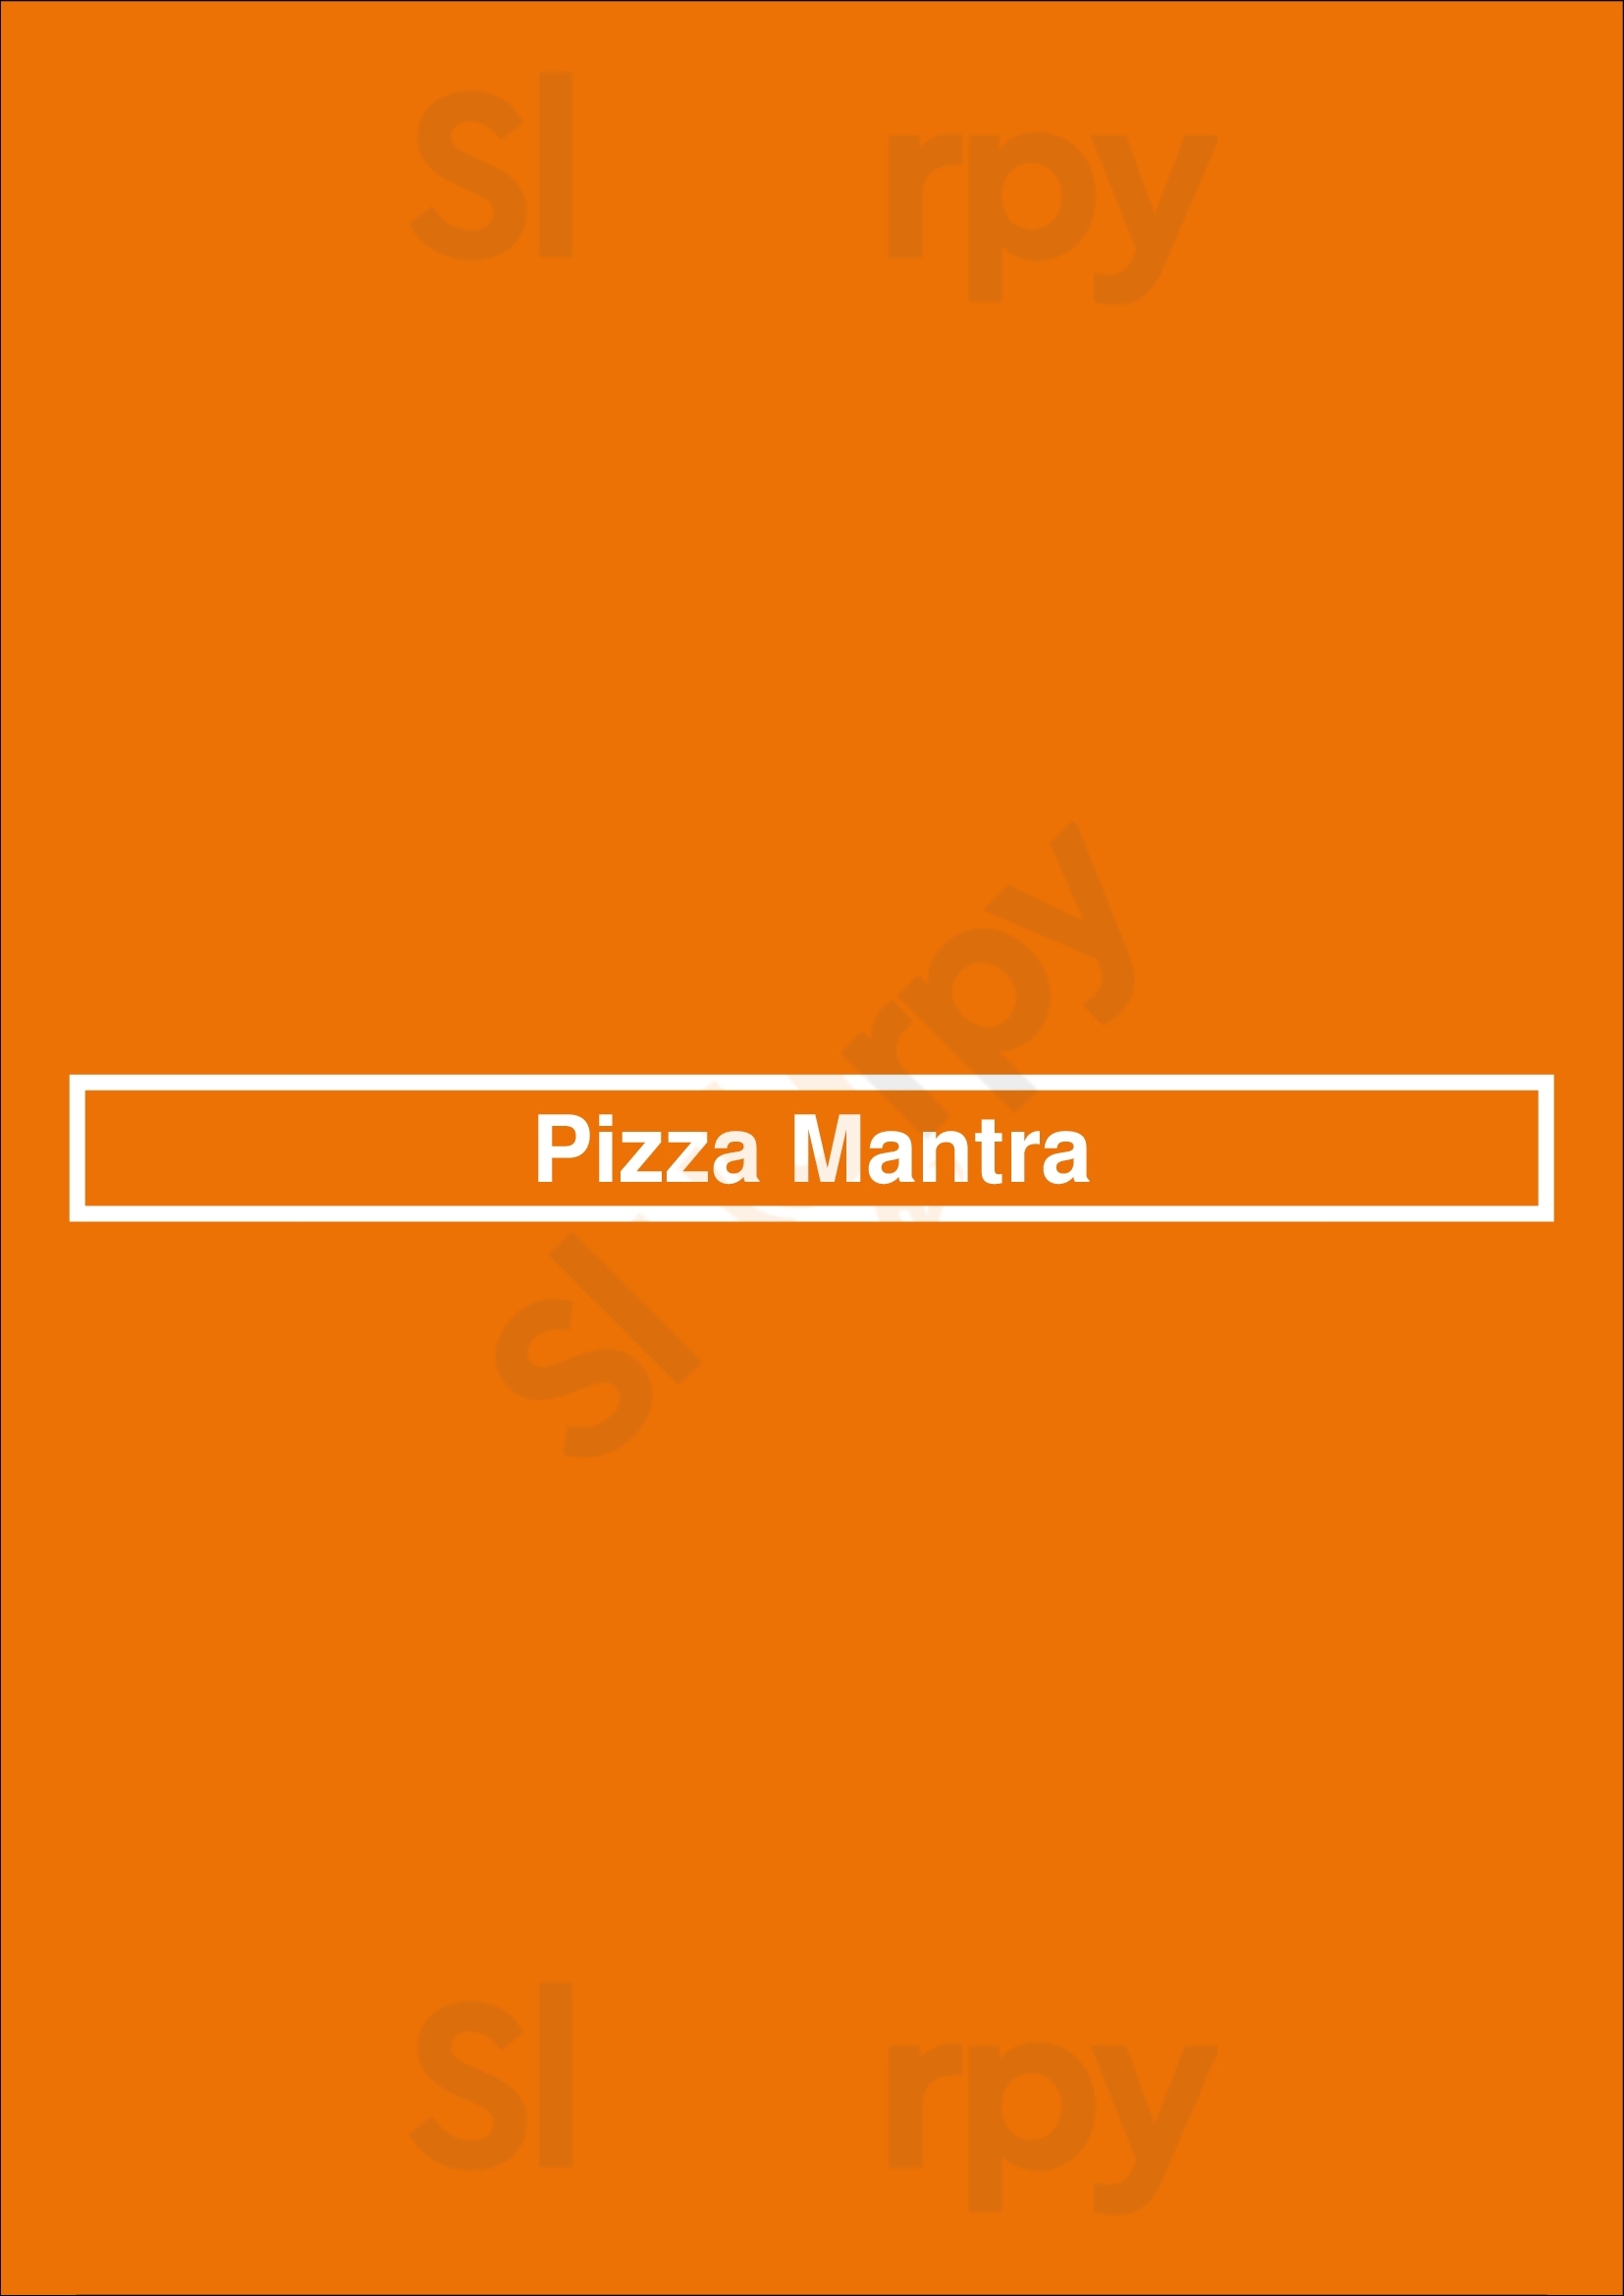 Pizza Mantra Langley Menu - 1